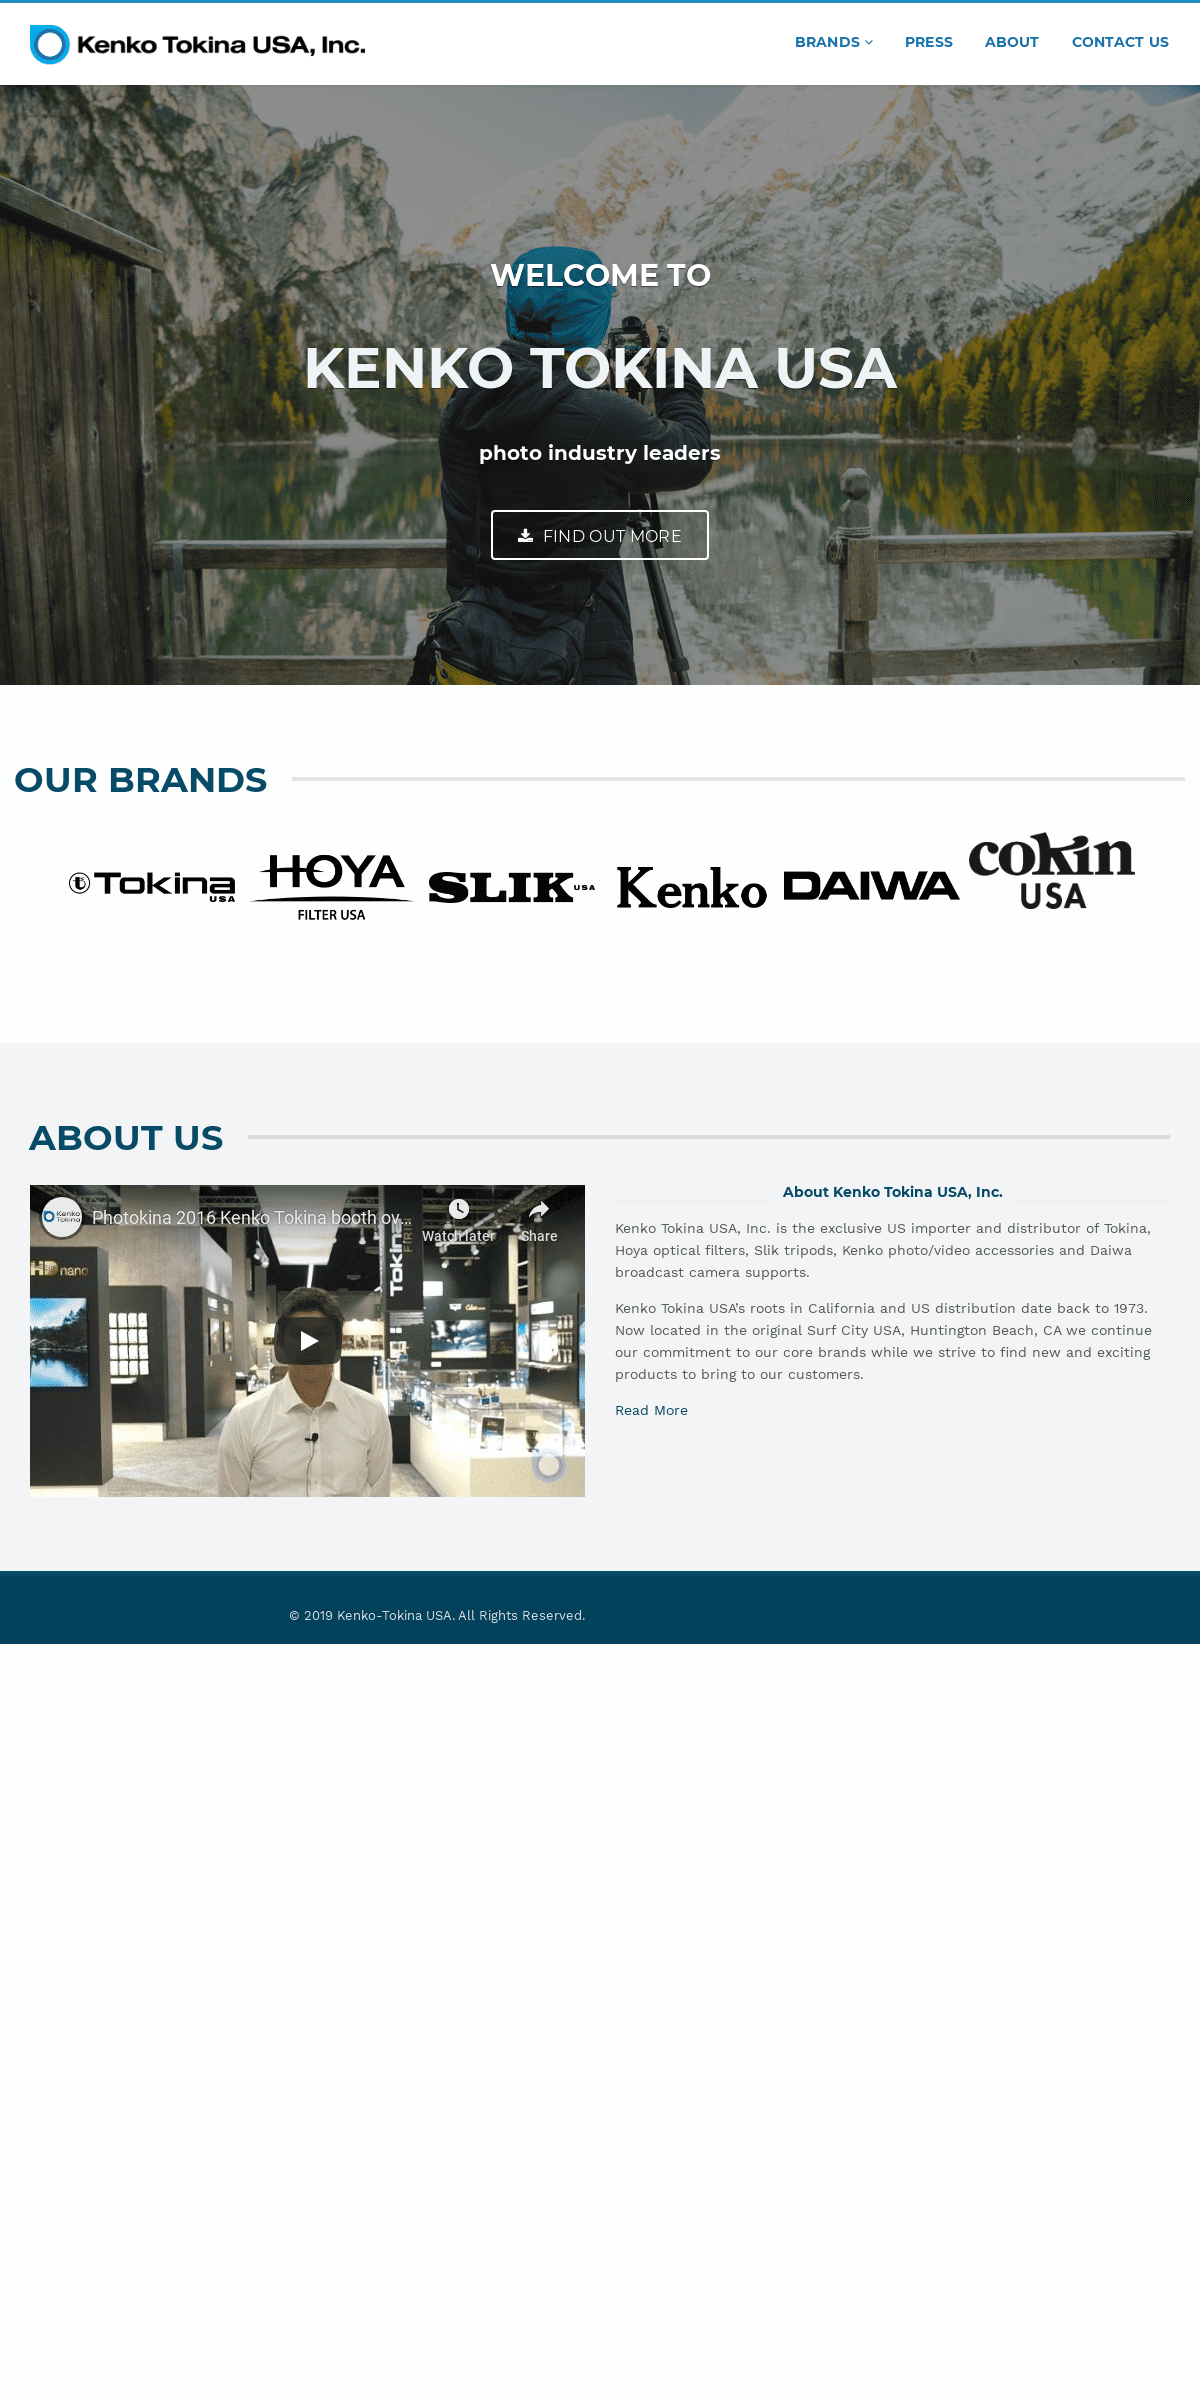 A complete backup of kenkotokinausa.com